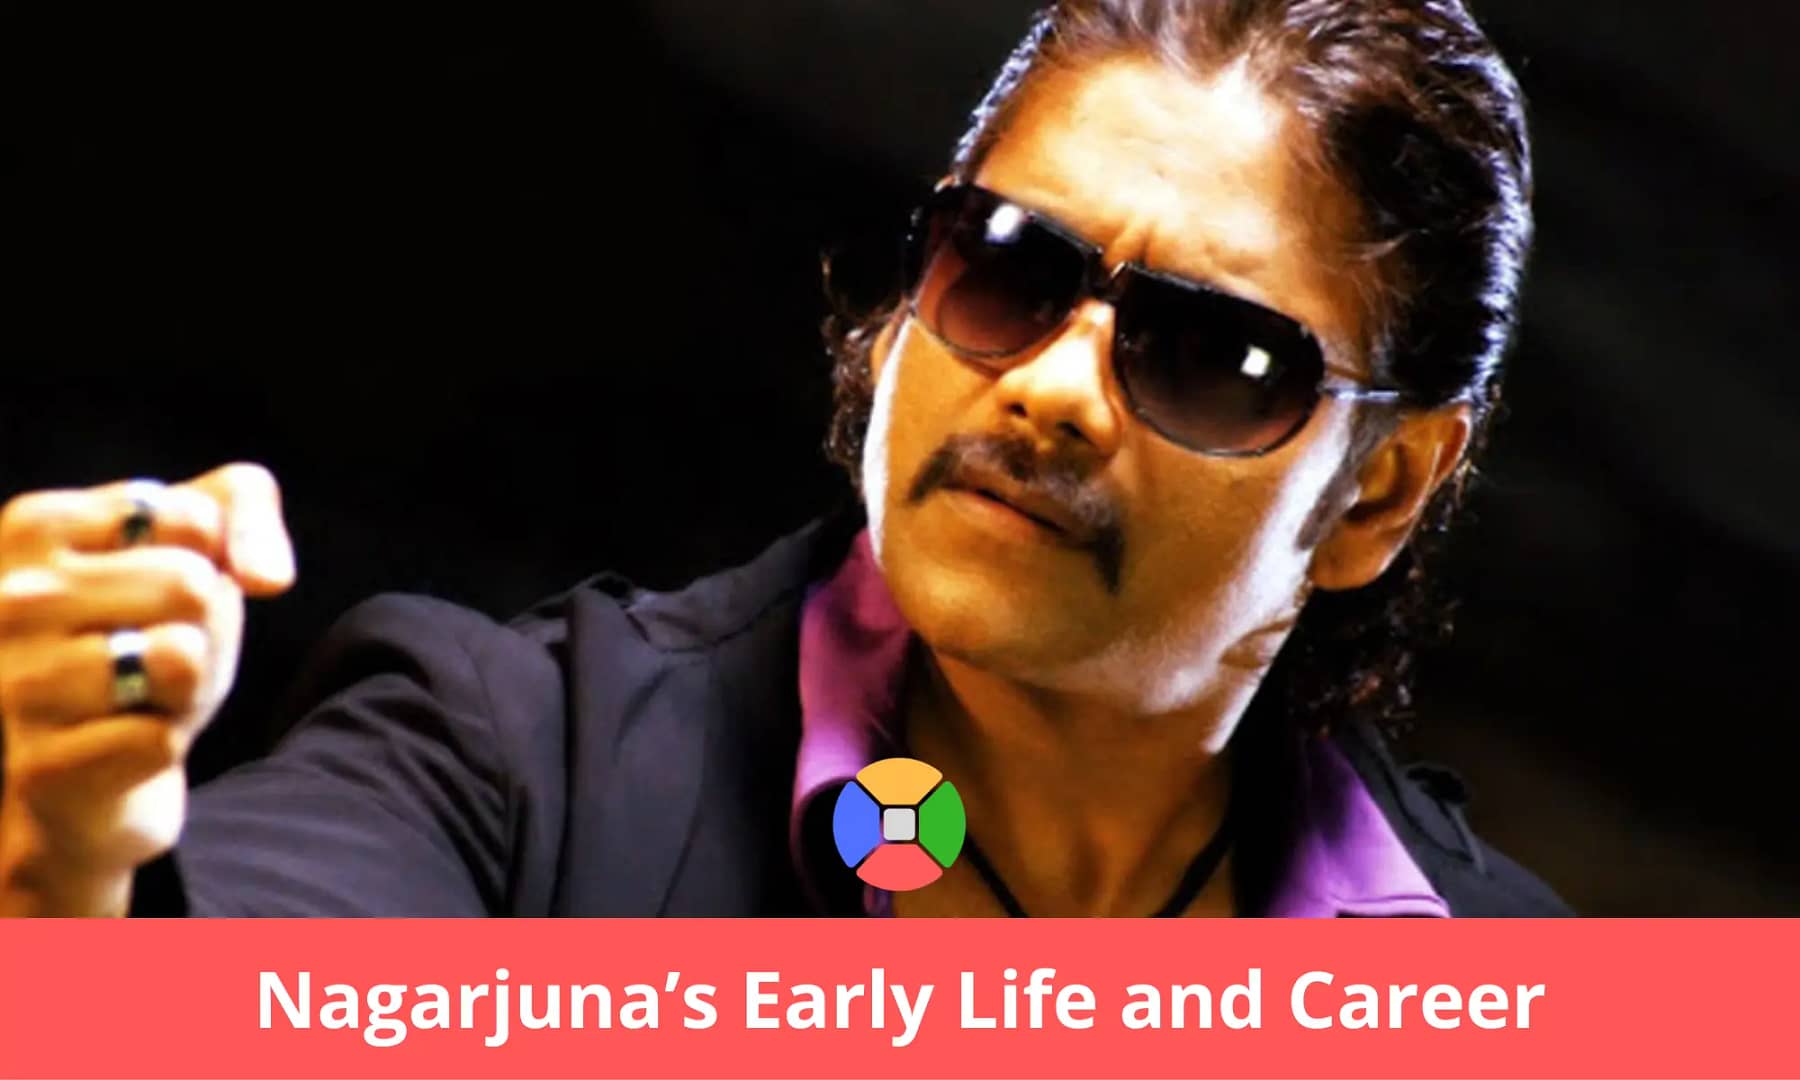 Nagarjuna's Career and Early Life